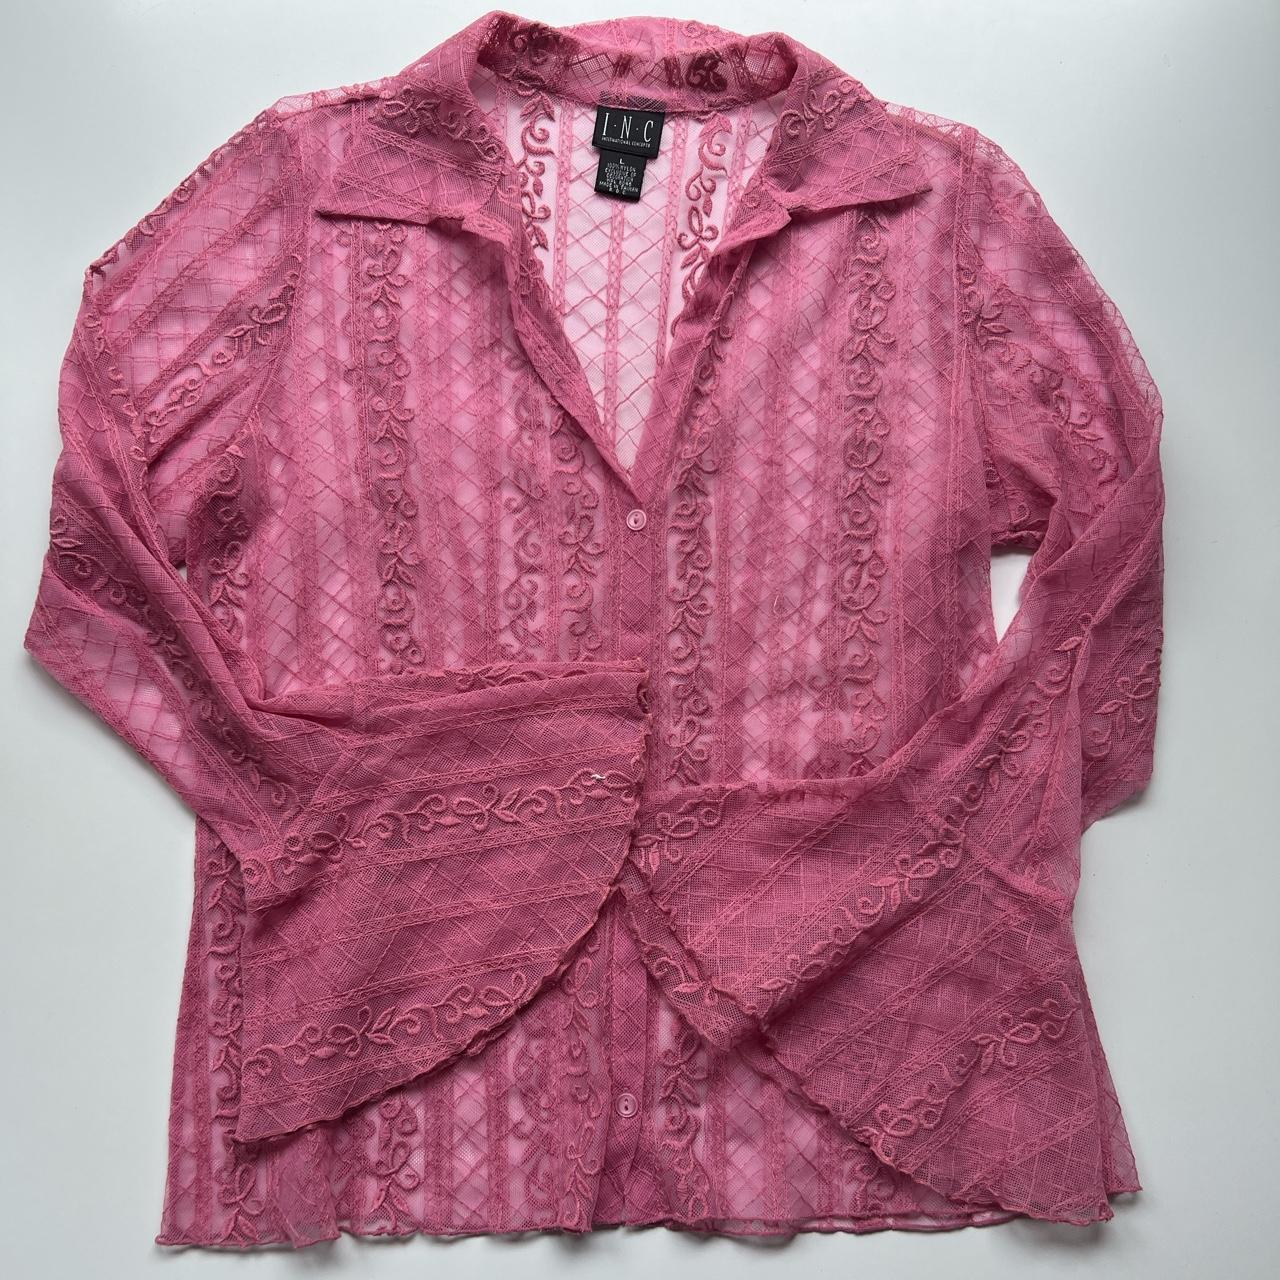 INC International Concepts Women's Pink Blouse (4)